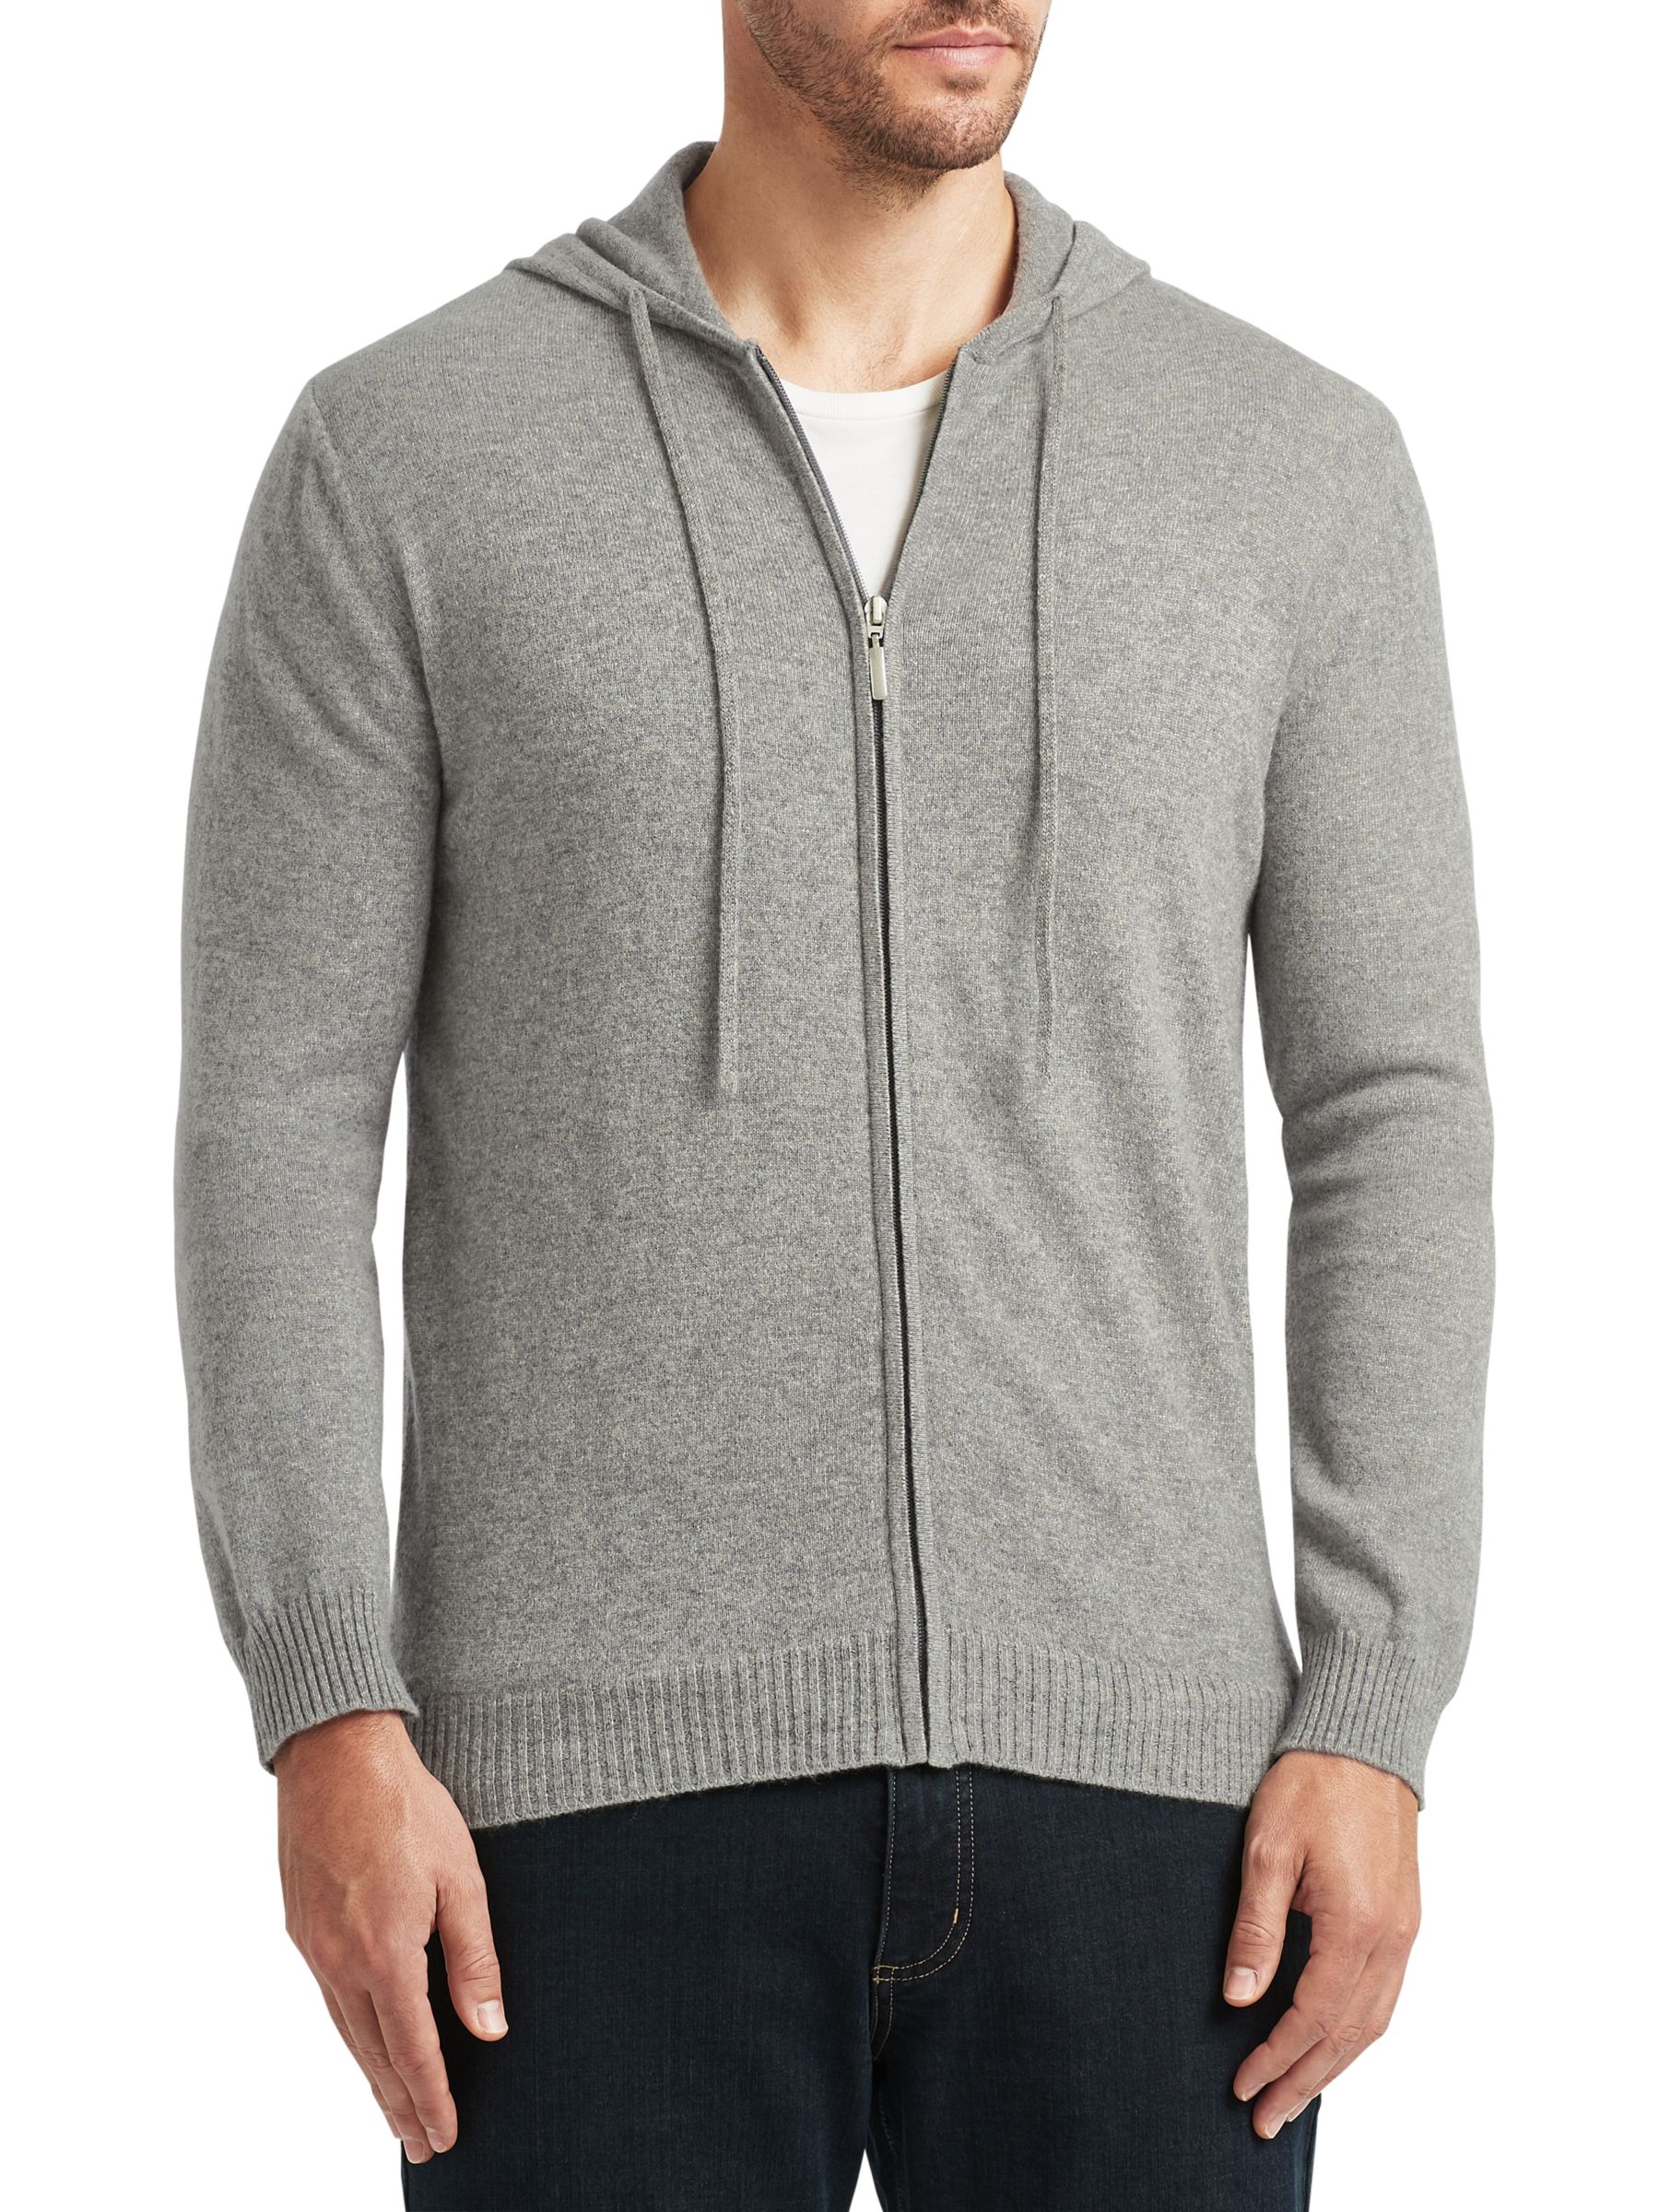 cashmere zip hoodie mens, Off 62%, ustaofis.com